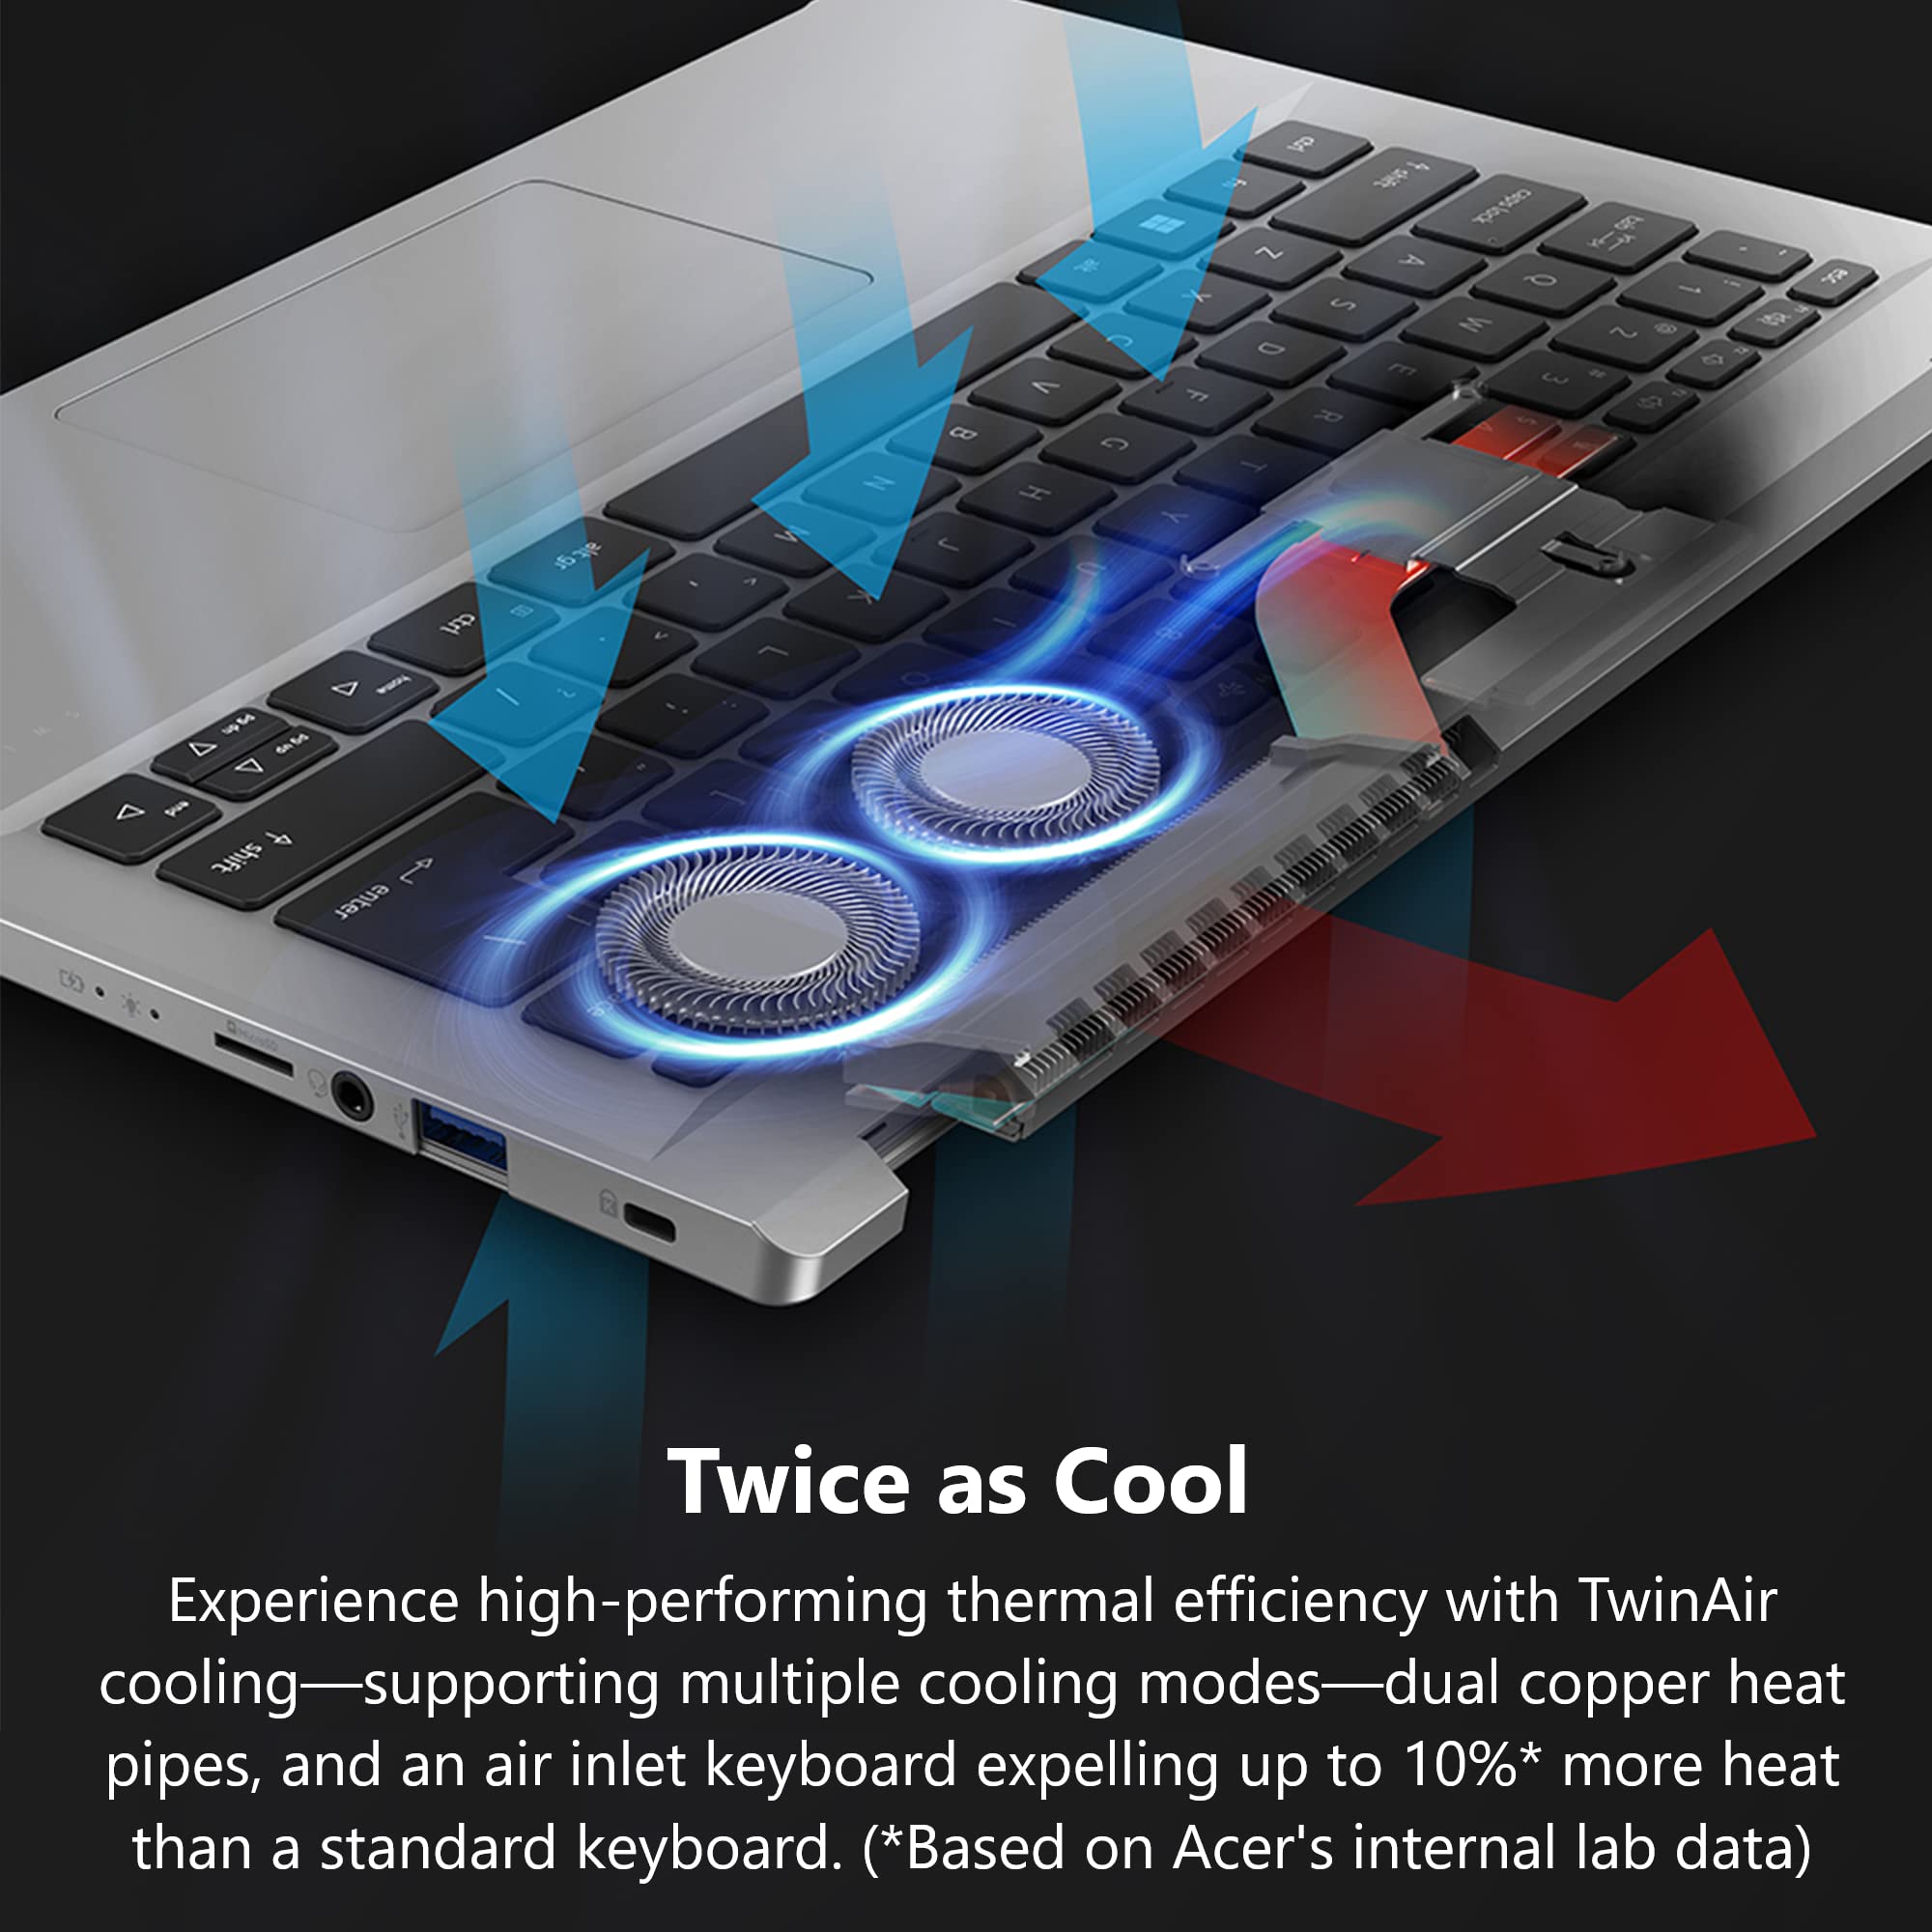 Acer Swift Go 14 Intel Evo Thin & Light Laptop 14